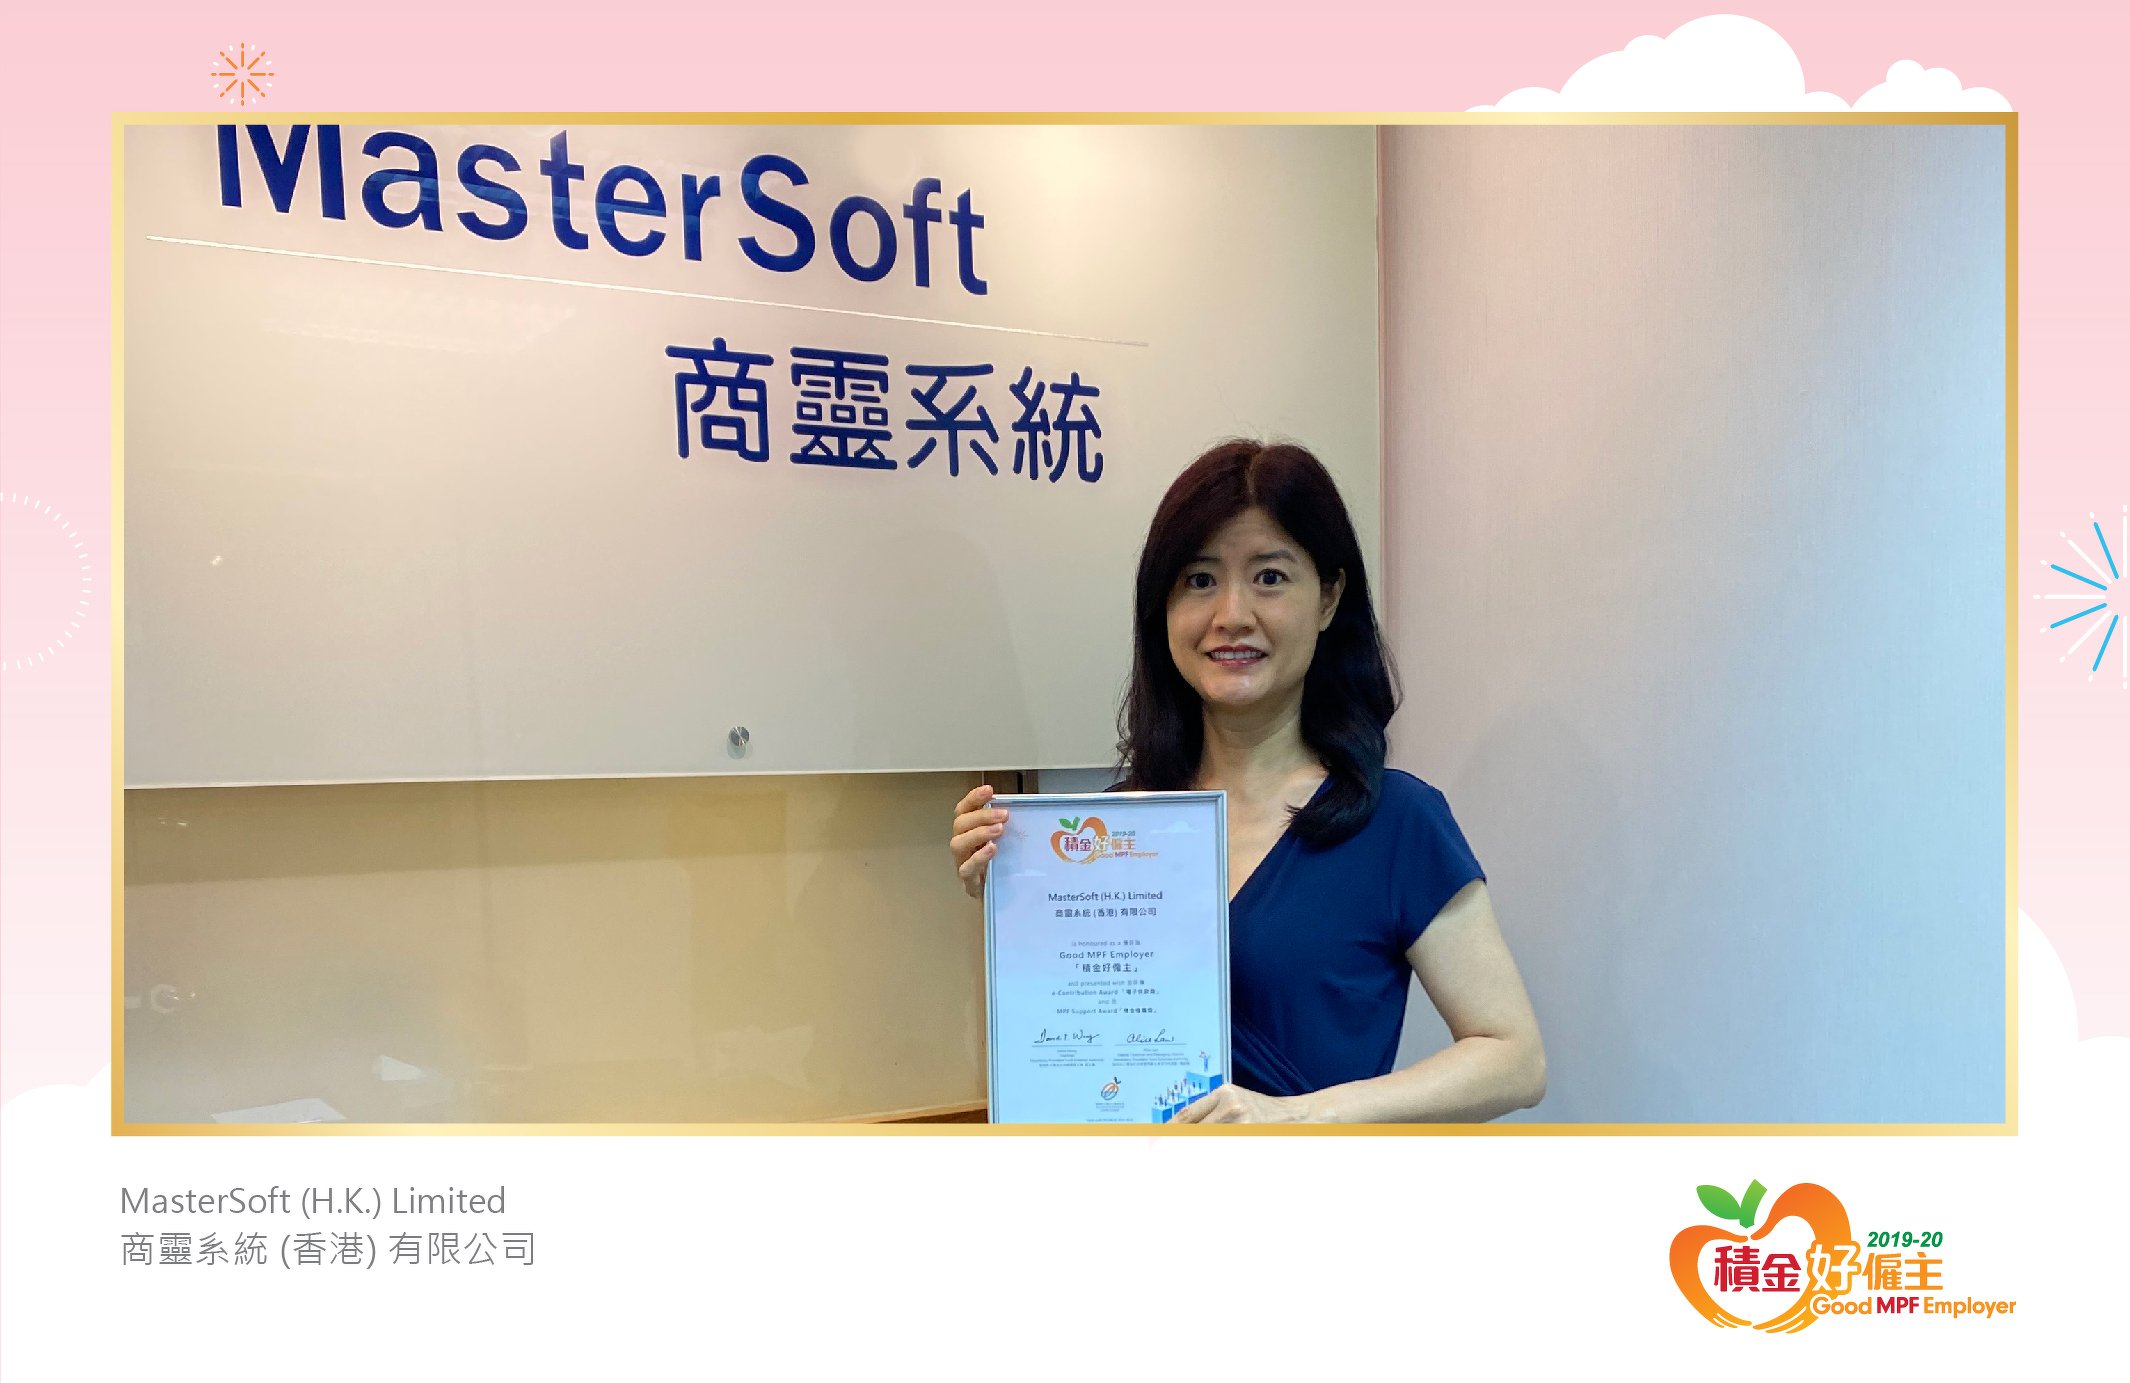 MasterSoft (H.K.) Limited 商靈系統 (香港) 有限公司